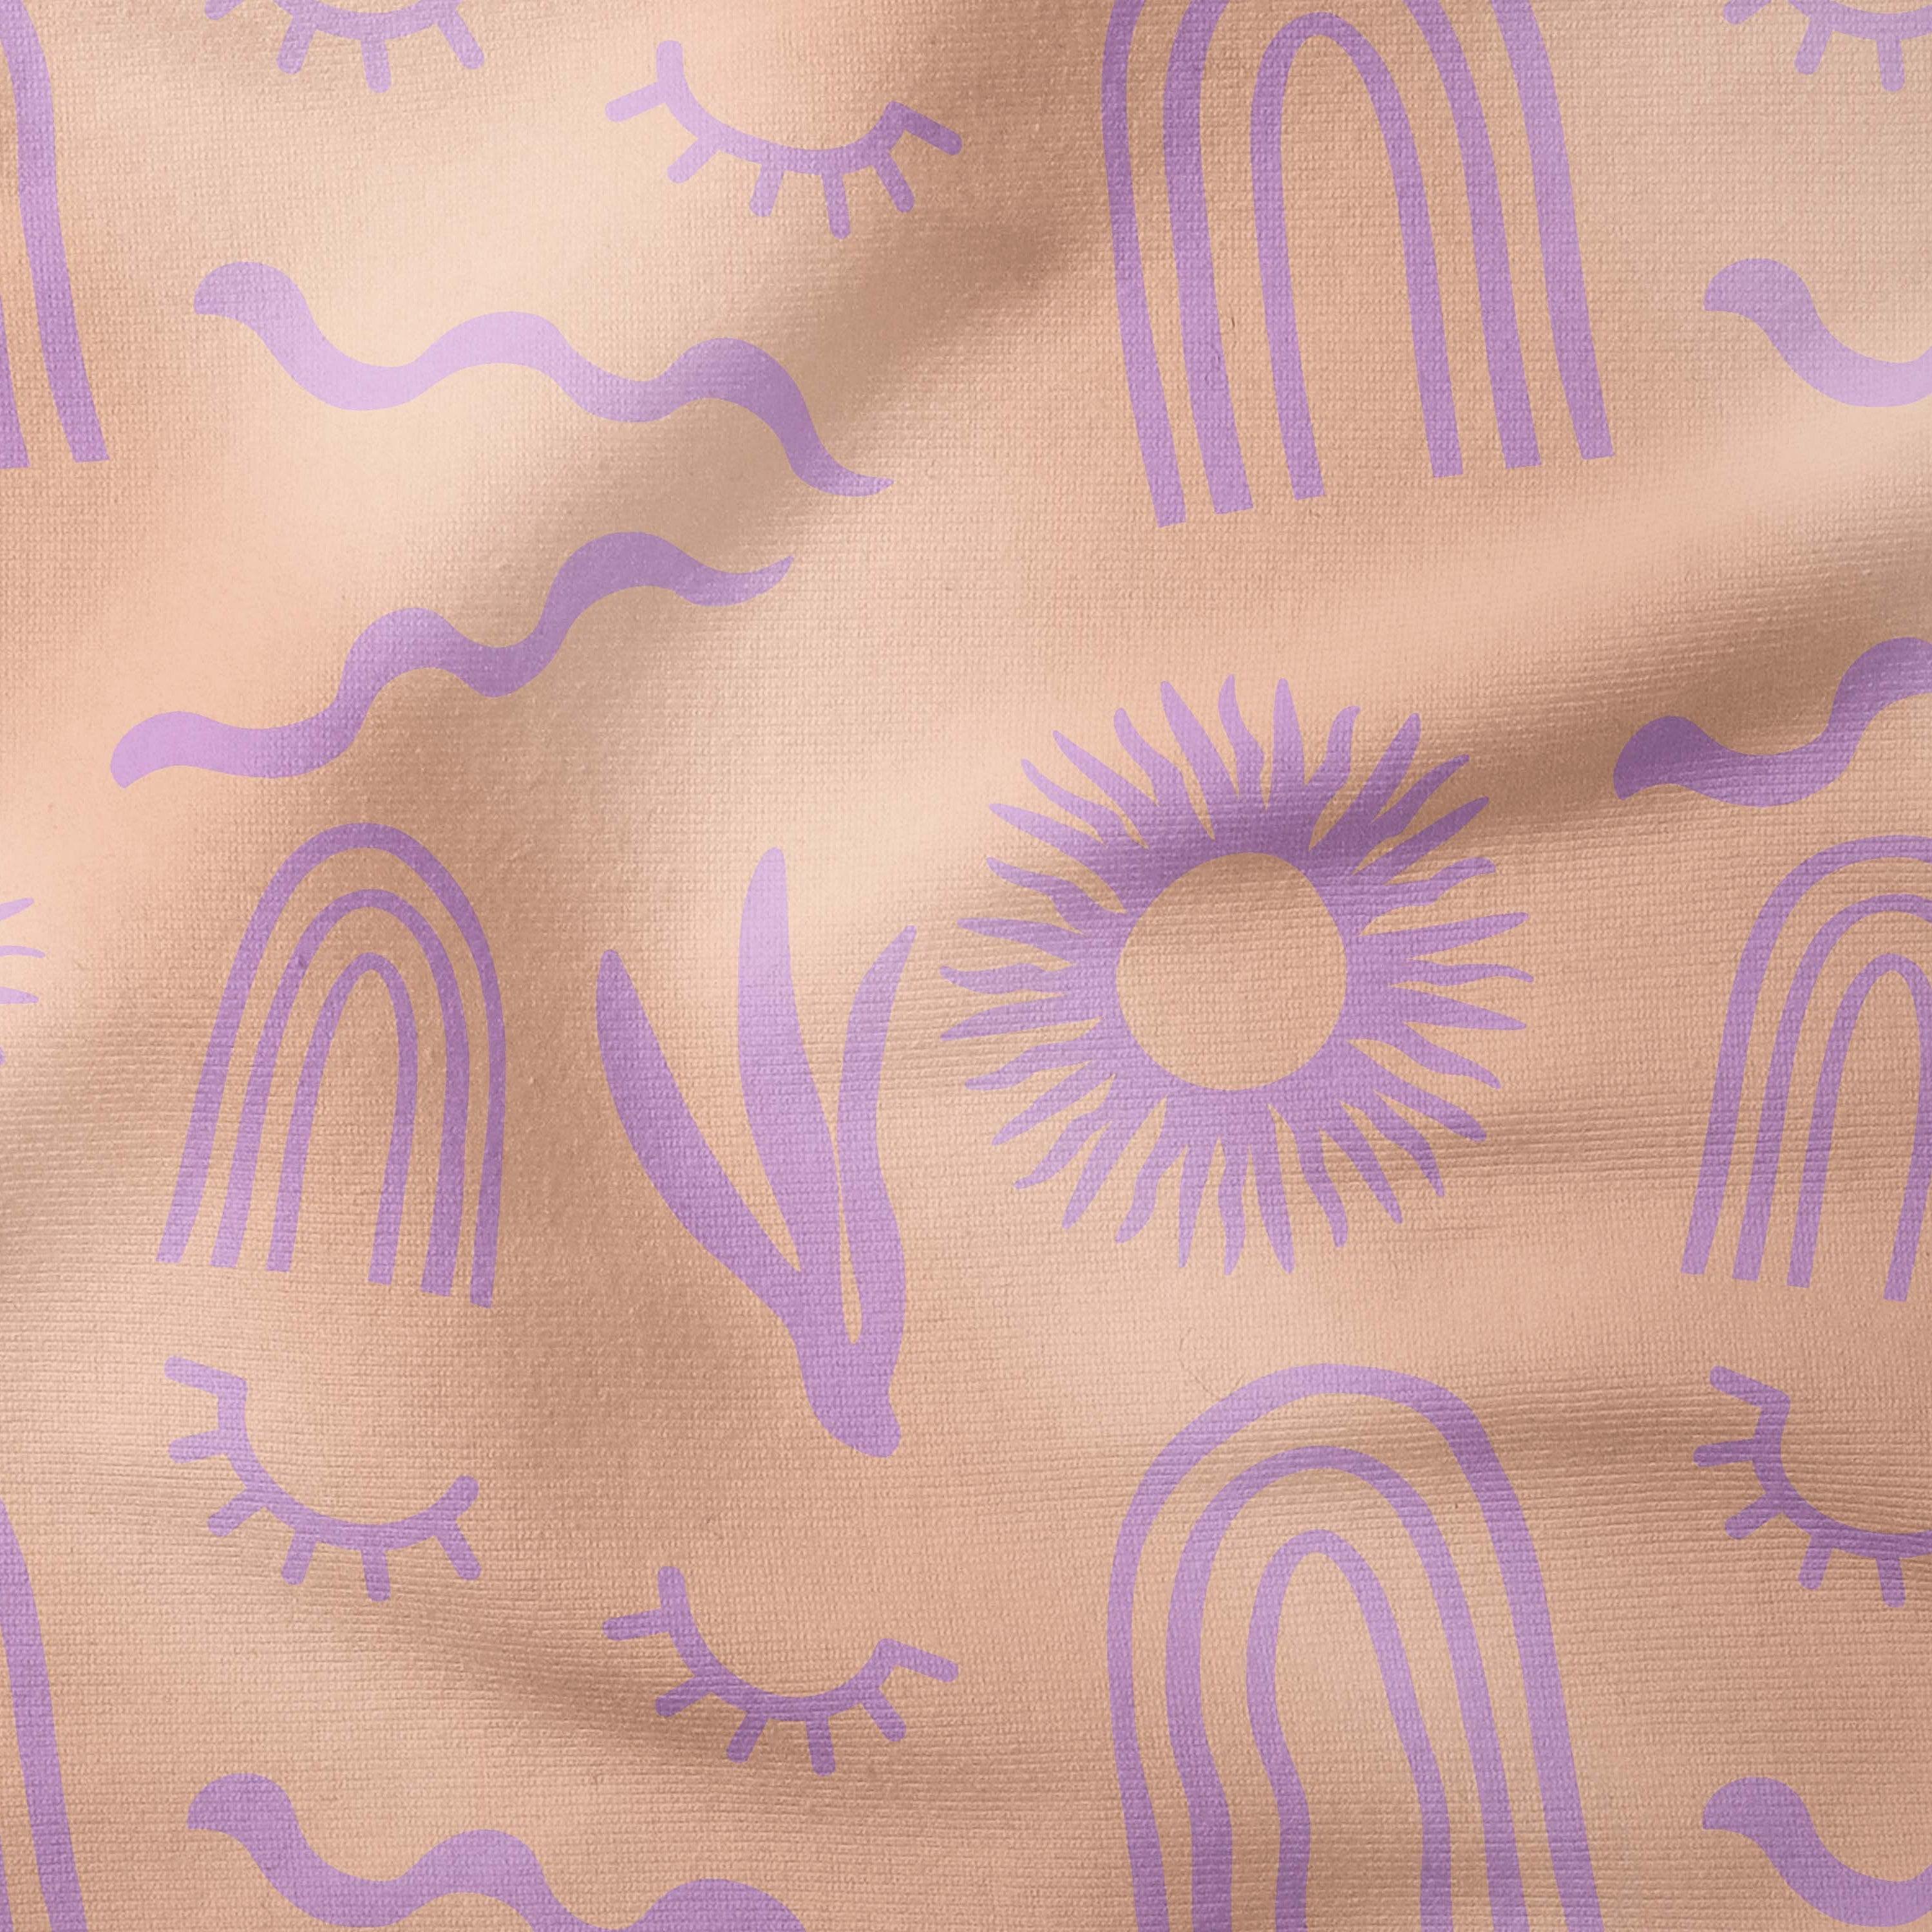 Abstract Shapes-Art Print Fabric-Melco Fabrics-Lilac on Sand-Cotton Poplin (110gsm)-Online-Fabric-Shop-Australia